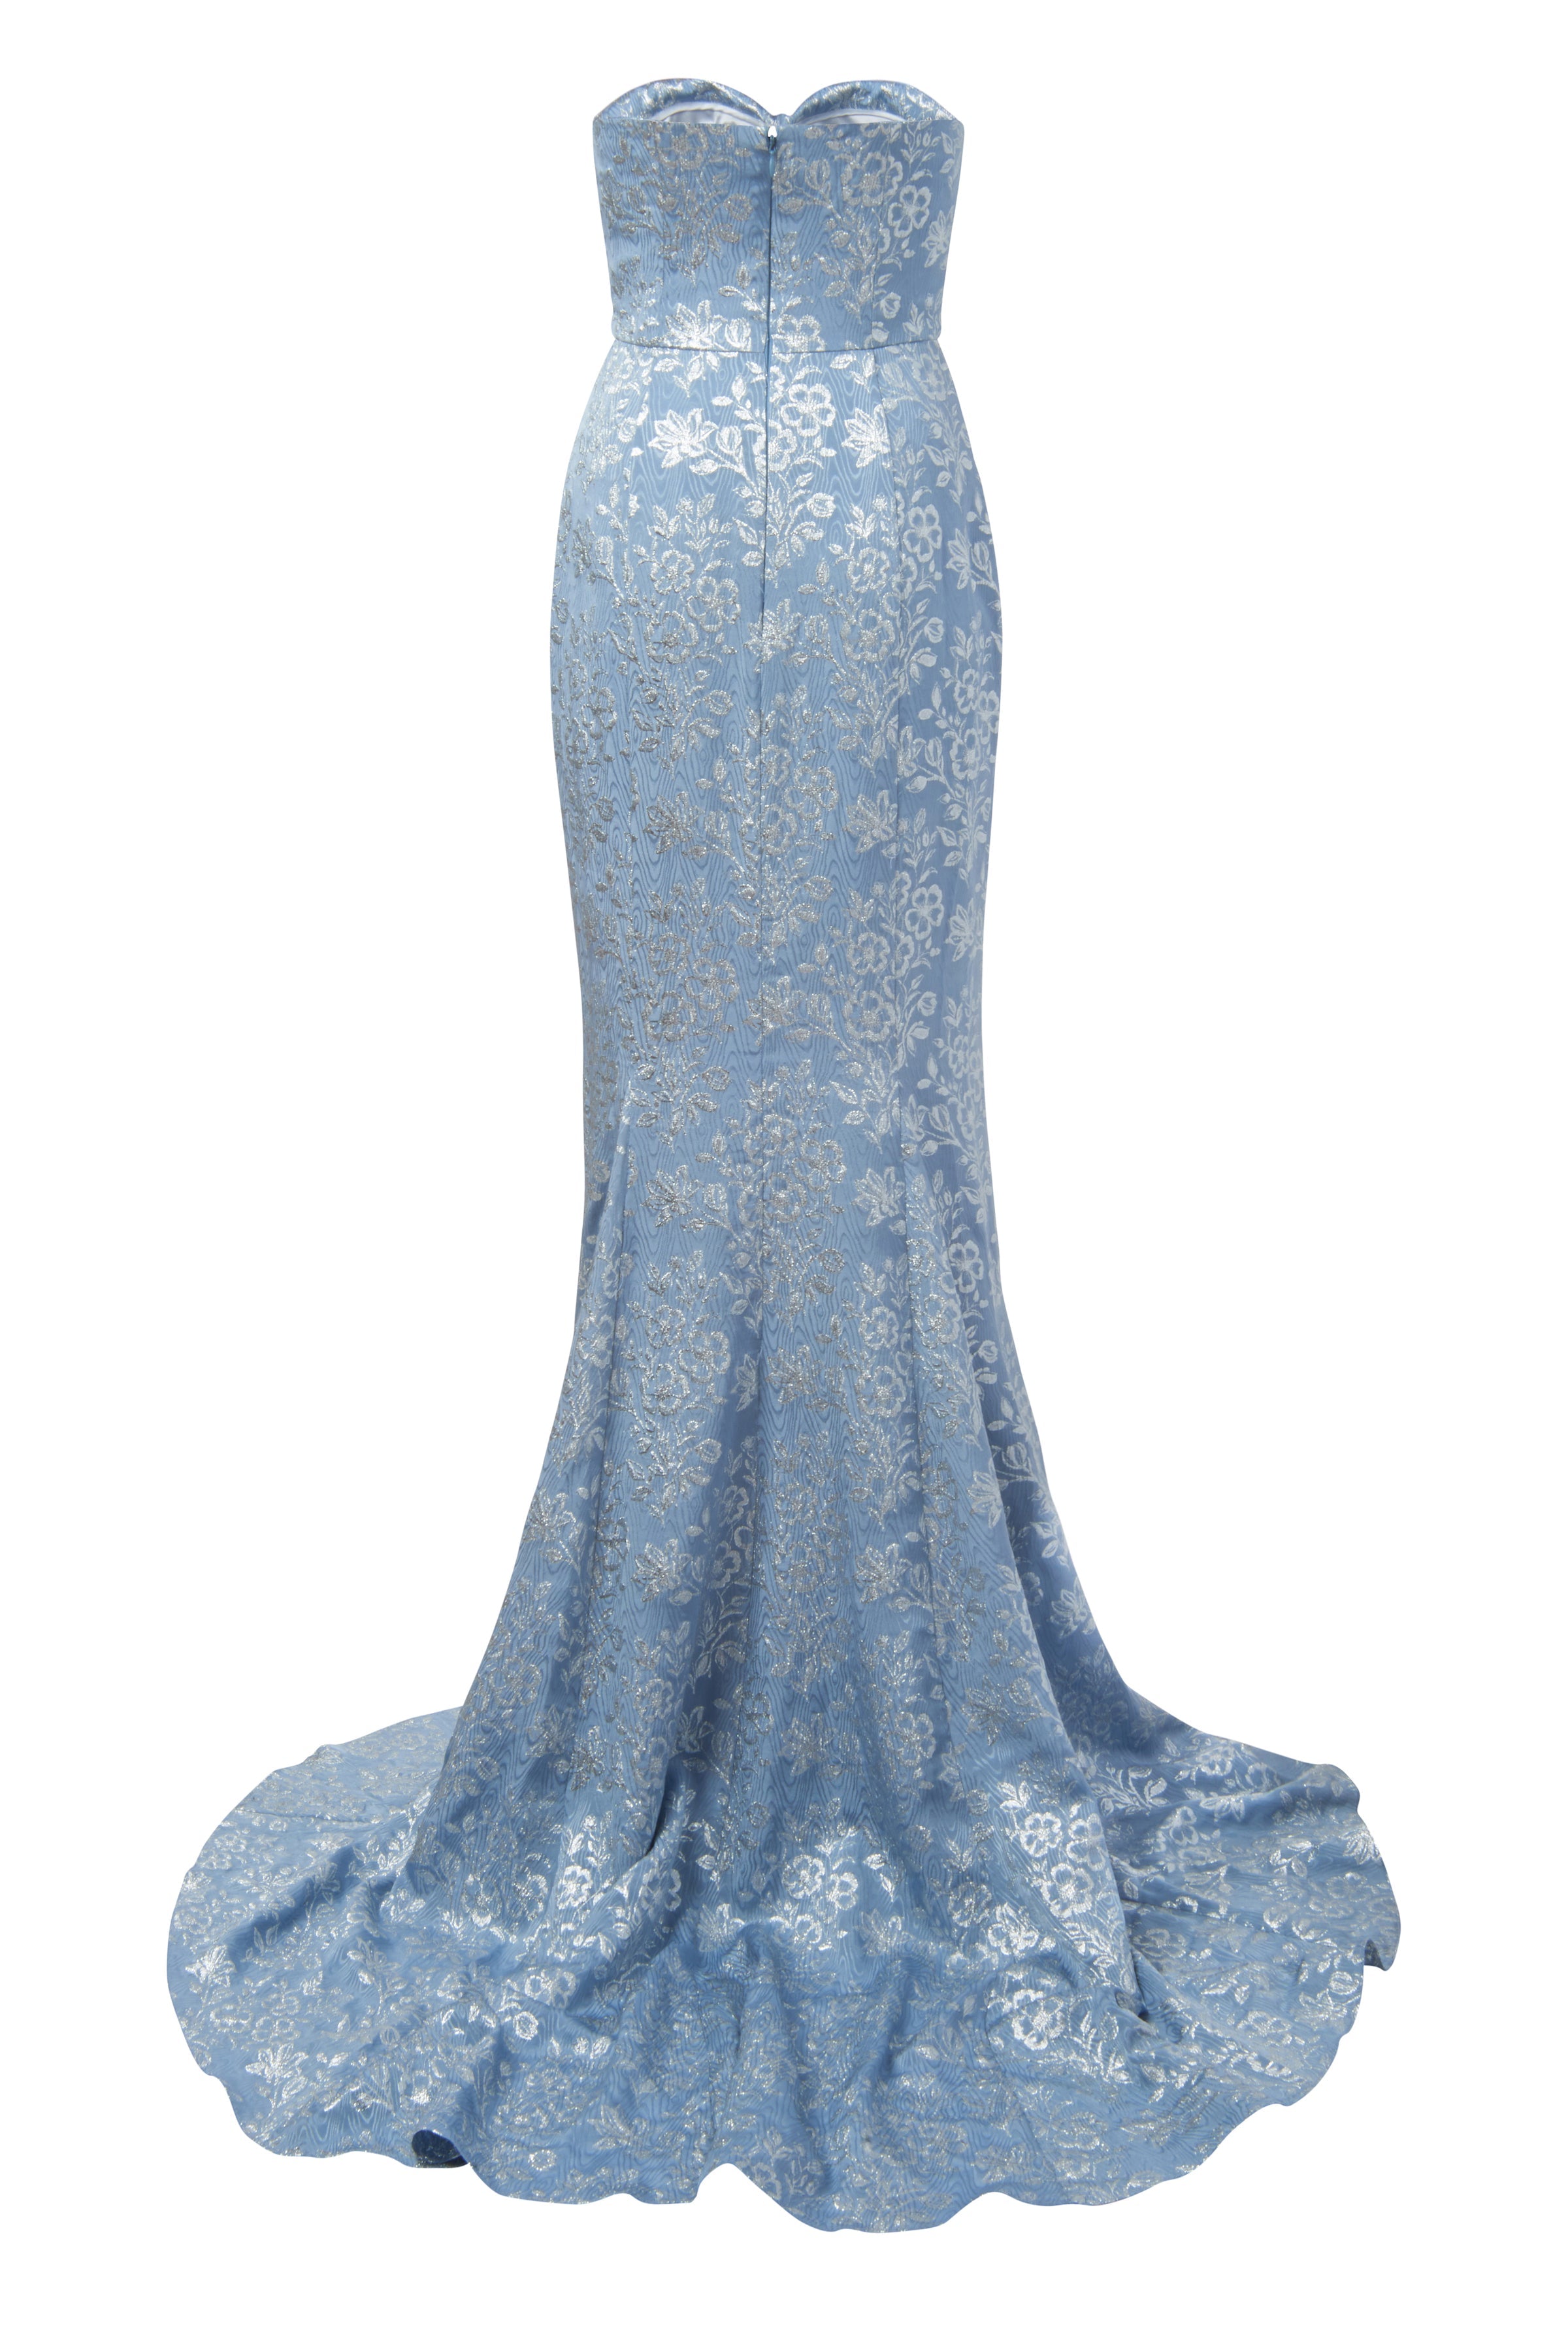 FINAL SALE: Leonora Blue Metallic Floral Strapless Gown